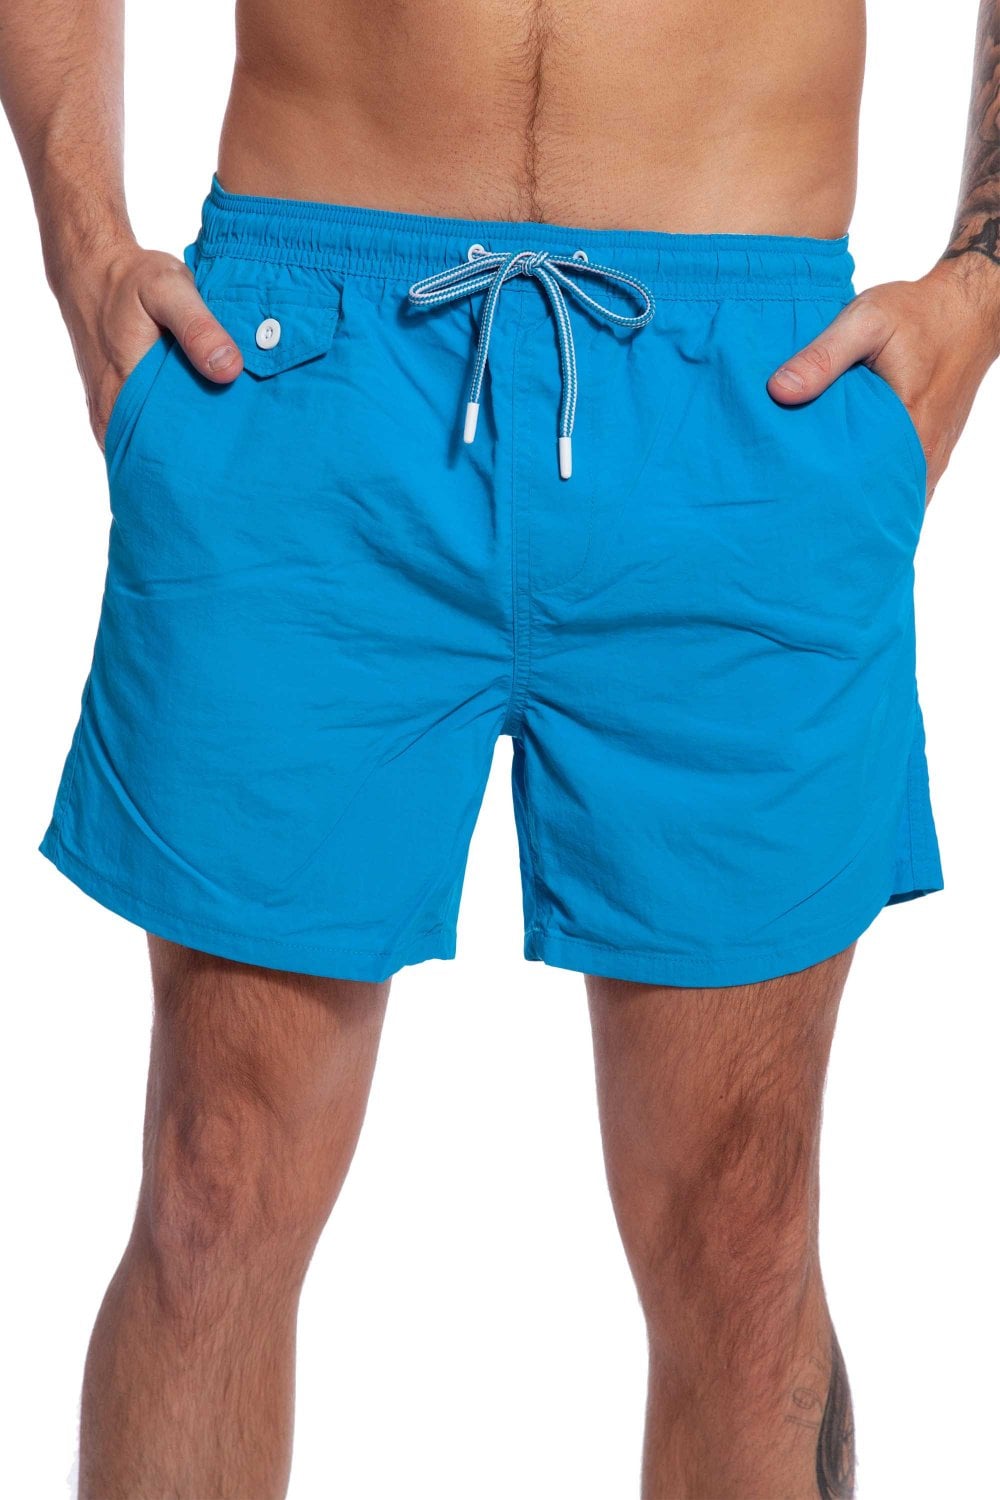 Pierpkf Swim Shorts